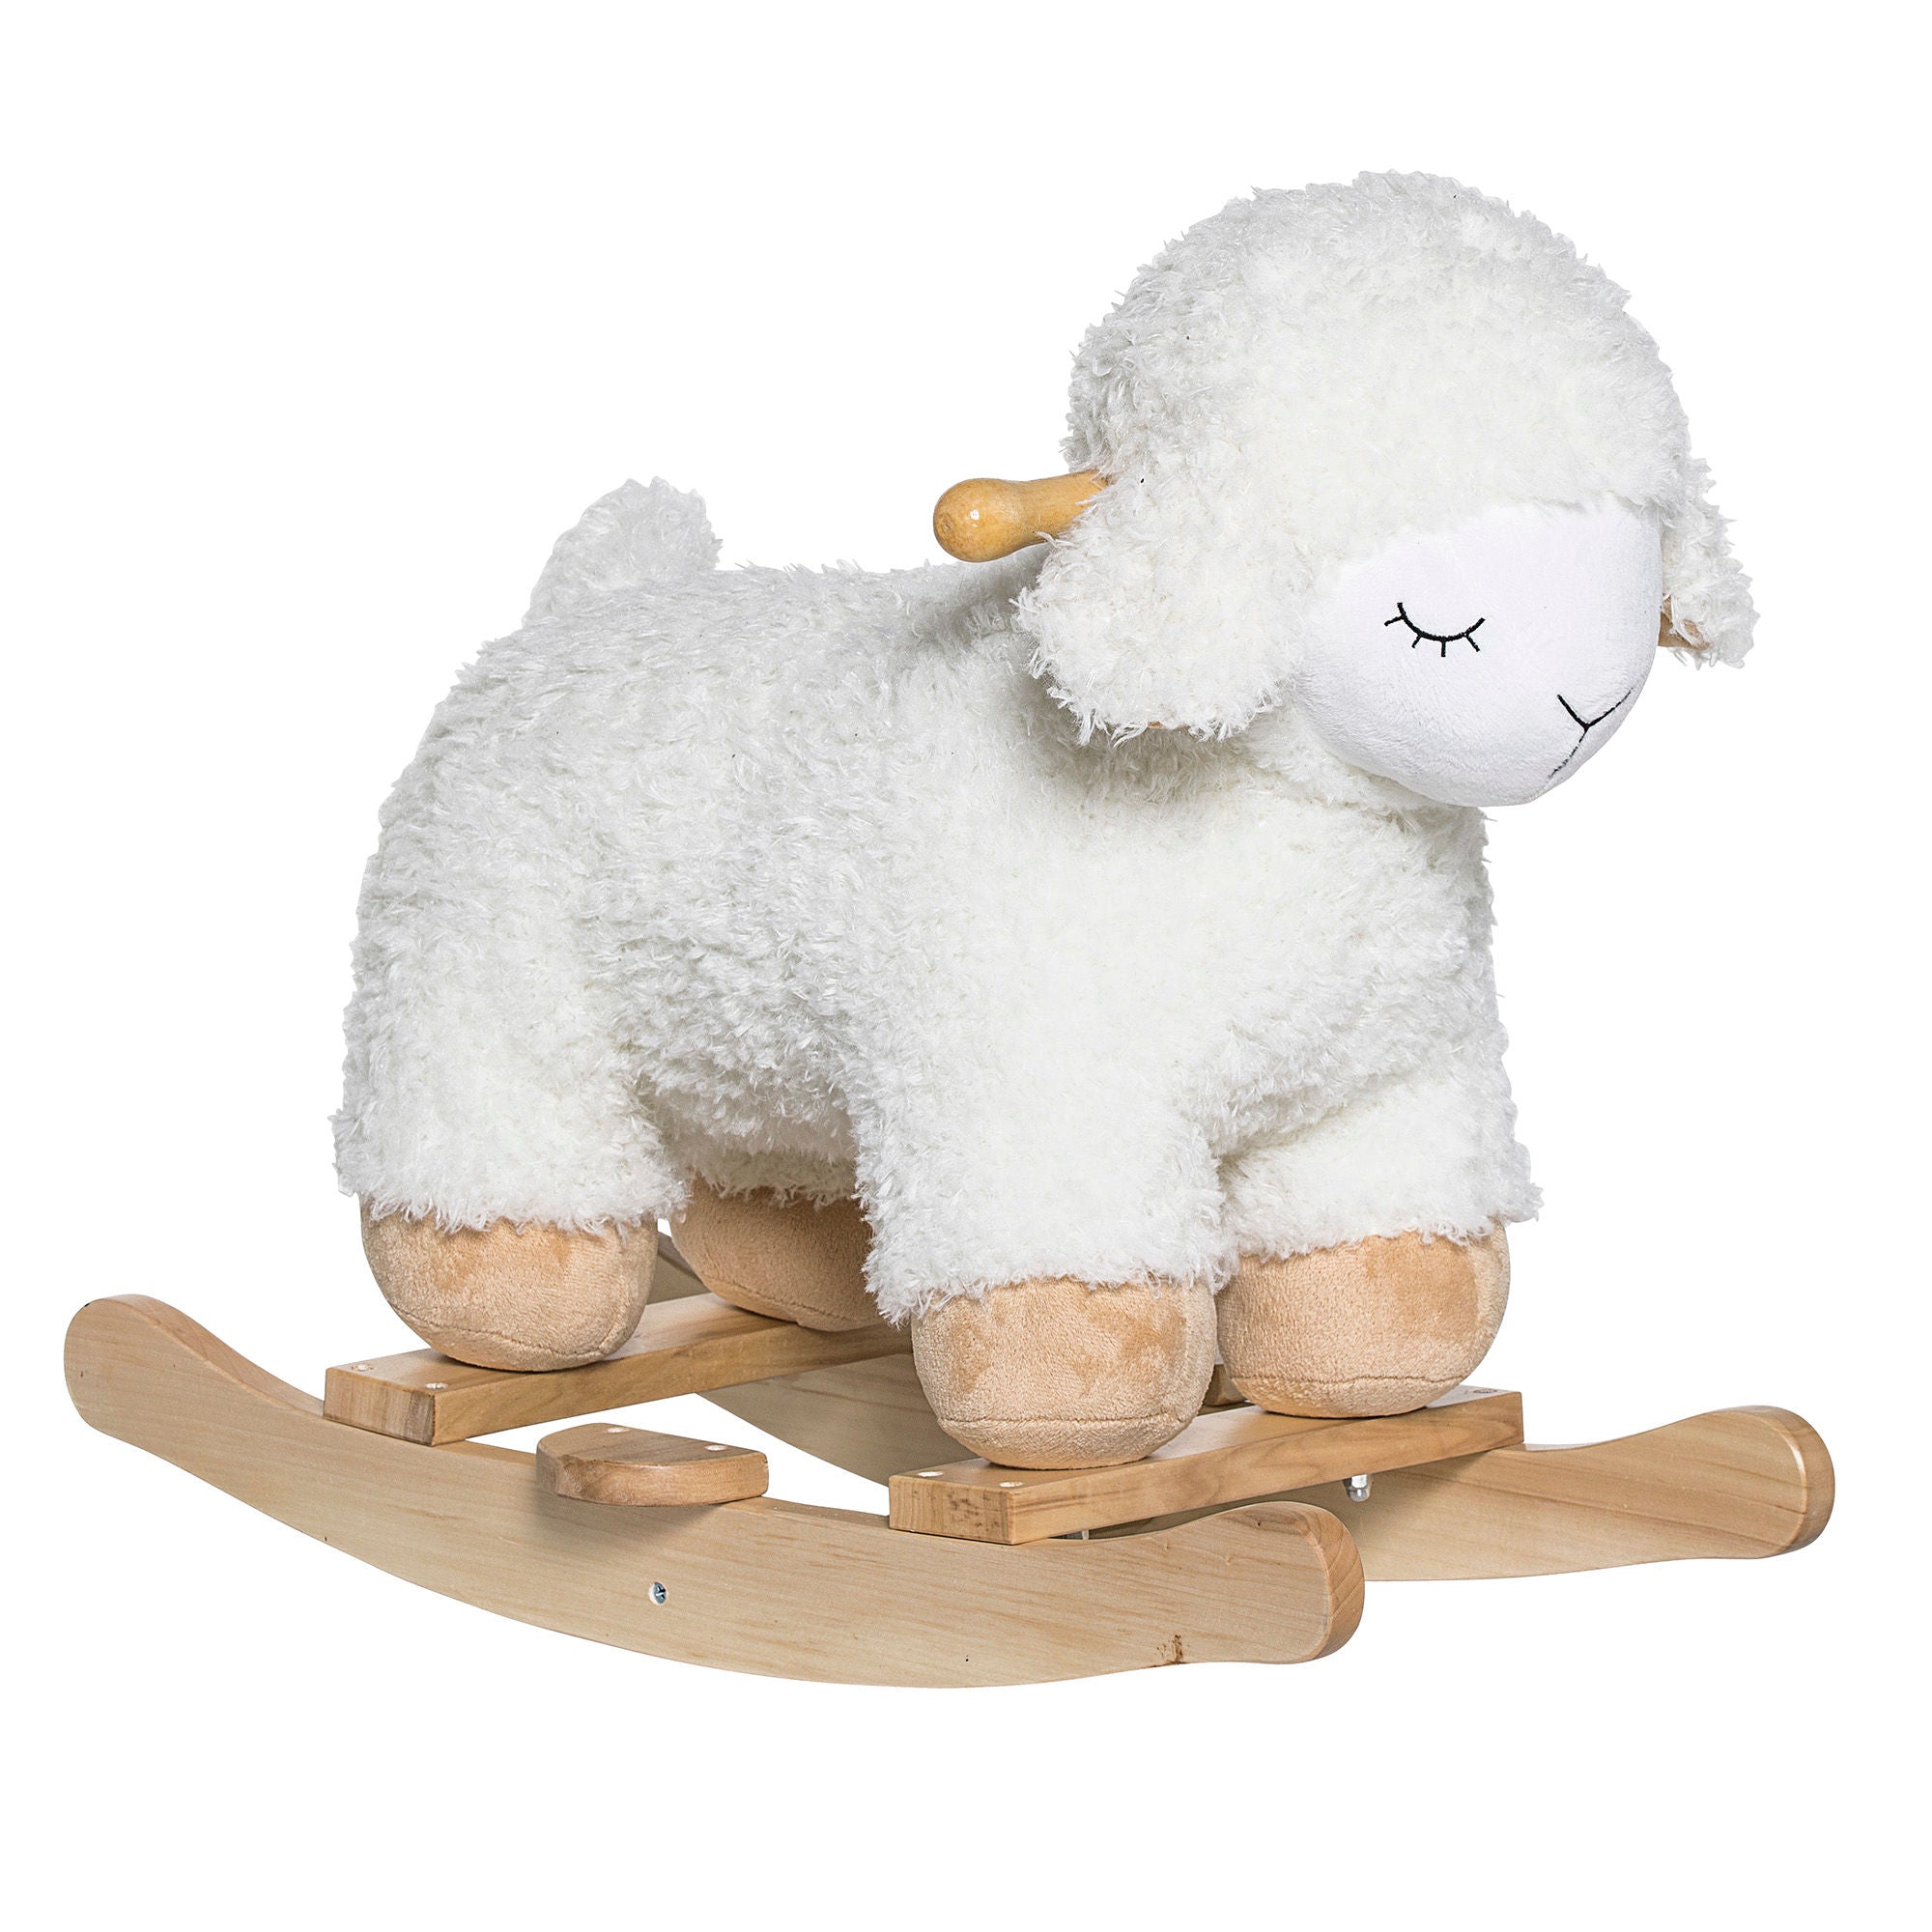 Bloomingville MINI Laasrith Rocking Toy, Sheep, White, Polyester